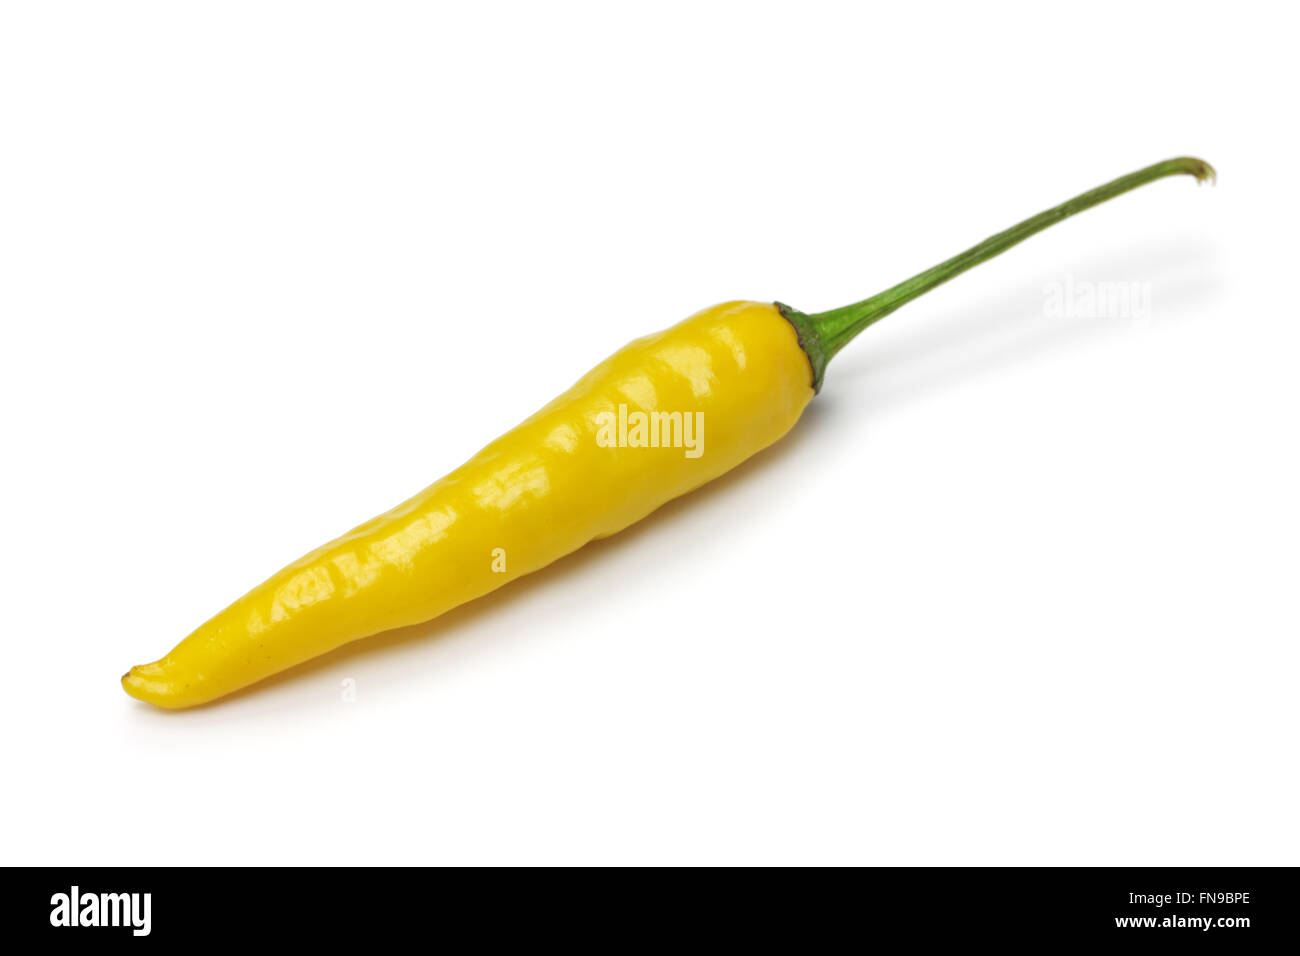 aji amarillo, yellow chili pepper on white background Stock Photo